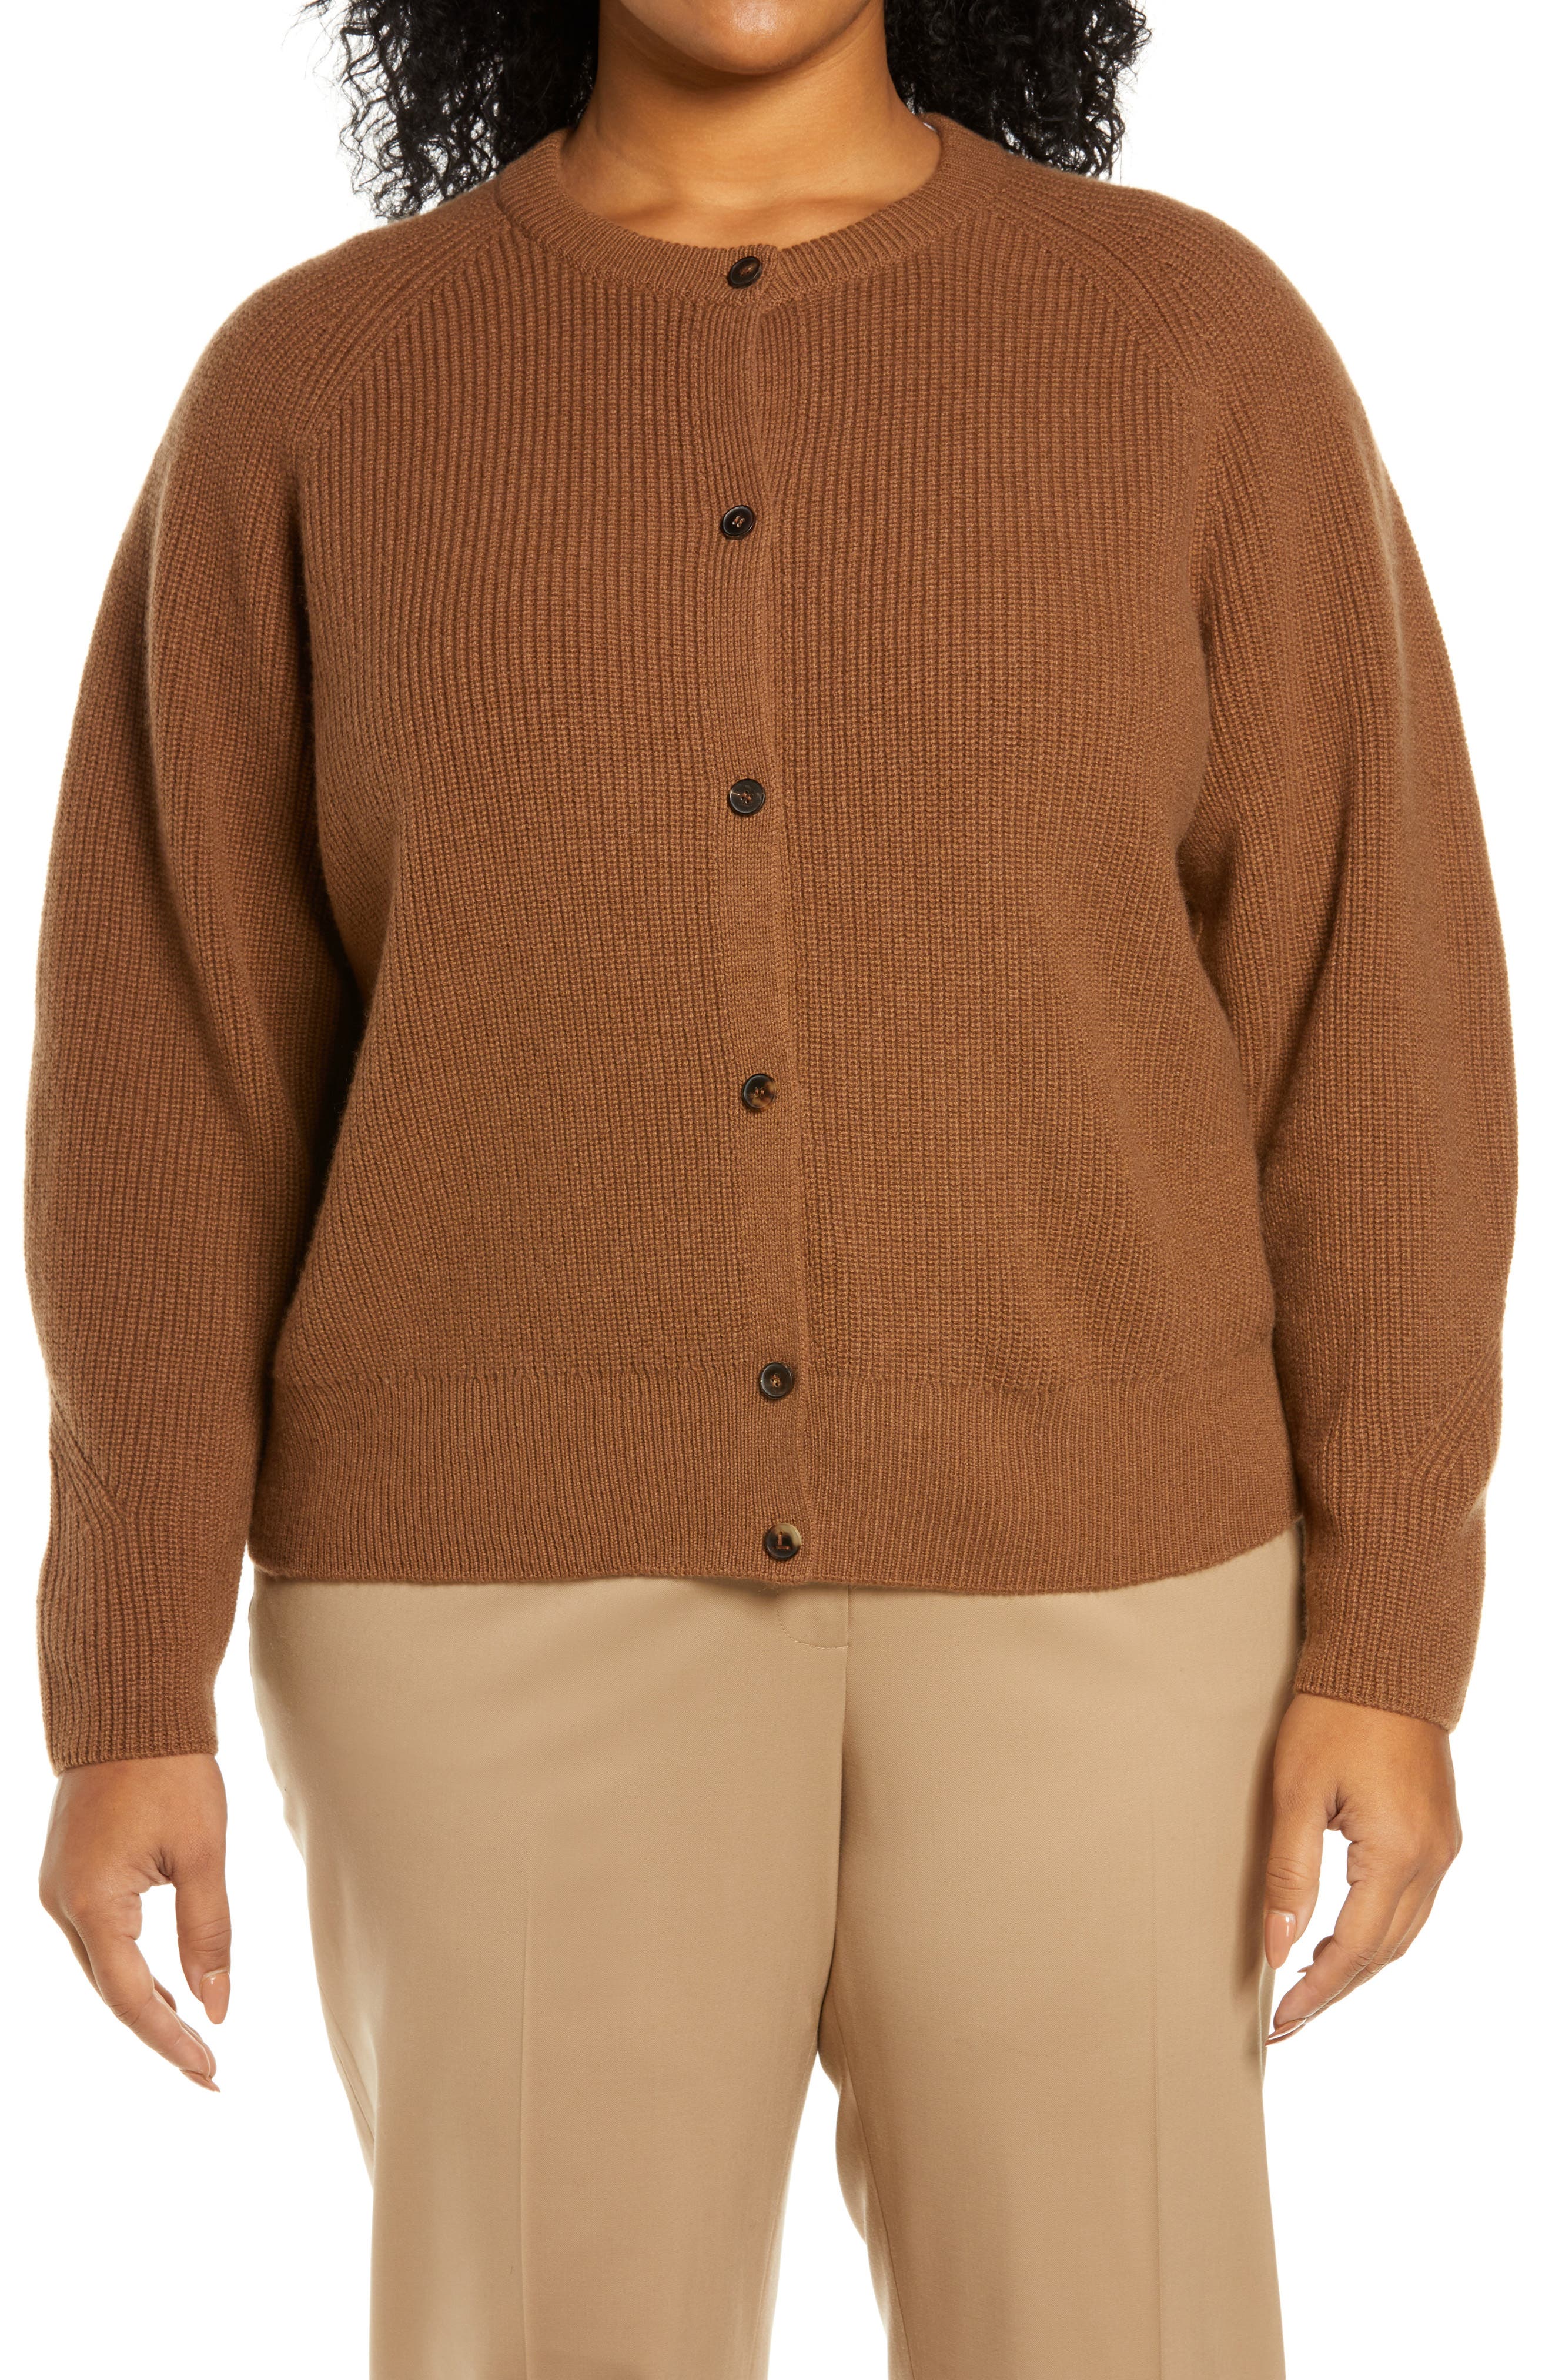 Lafayette 148 New York Womens Tan Cashmere Mock Neck Sweater XL BHFO 7000